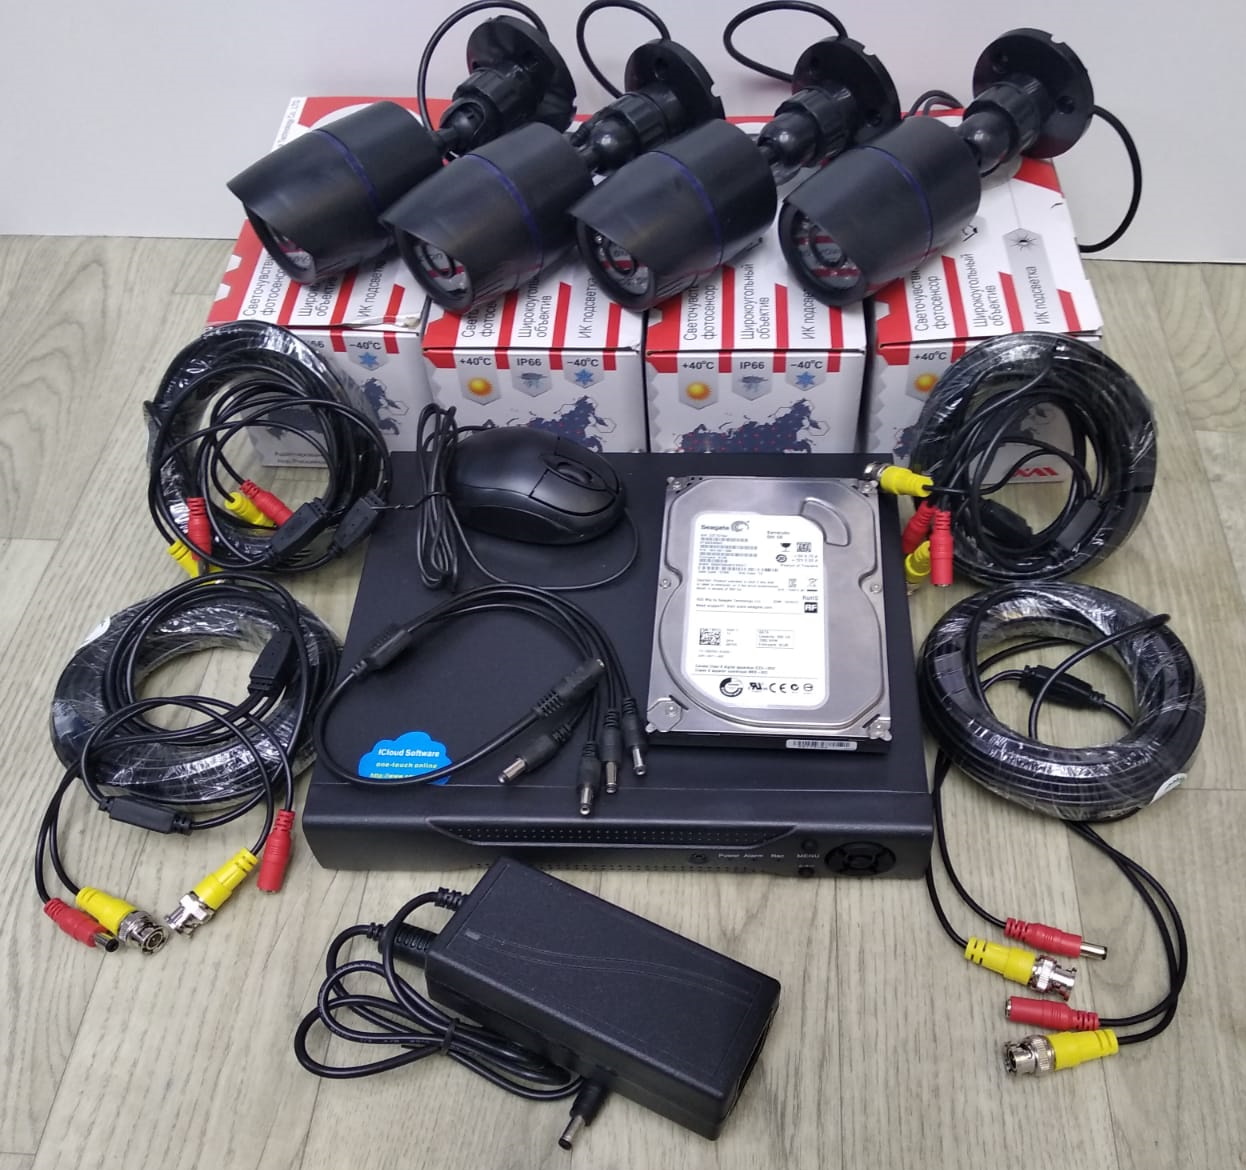 картинка Полный комплект AHD видеонаблюдения на 4 камеры 5мП (KIT4AHD100B5MP) от магазина Дом Видеонаблюдения (CCTVdom)